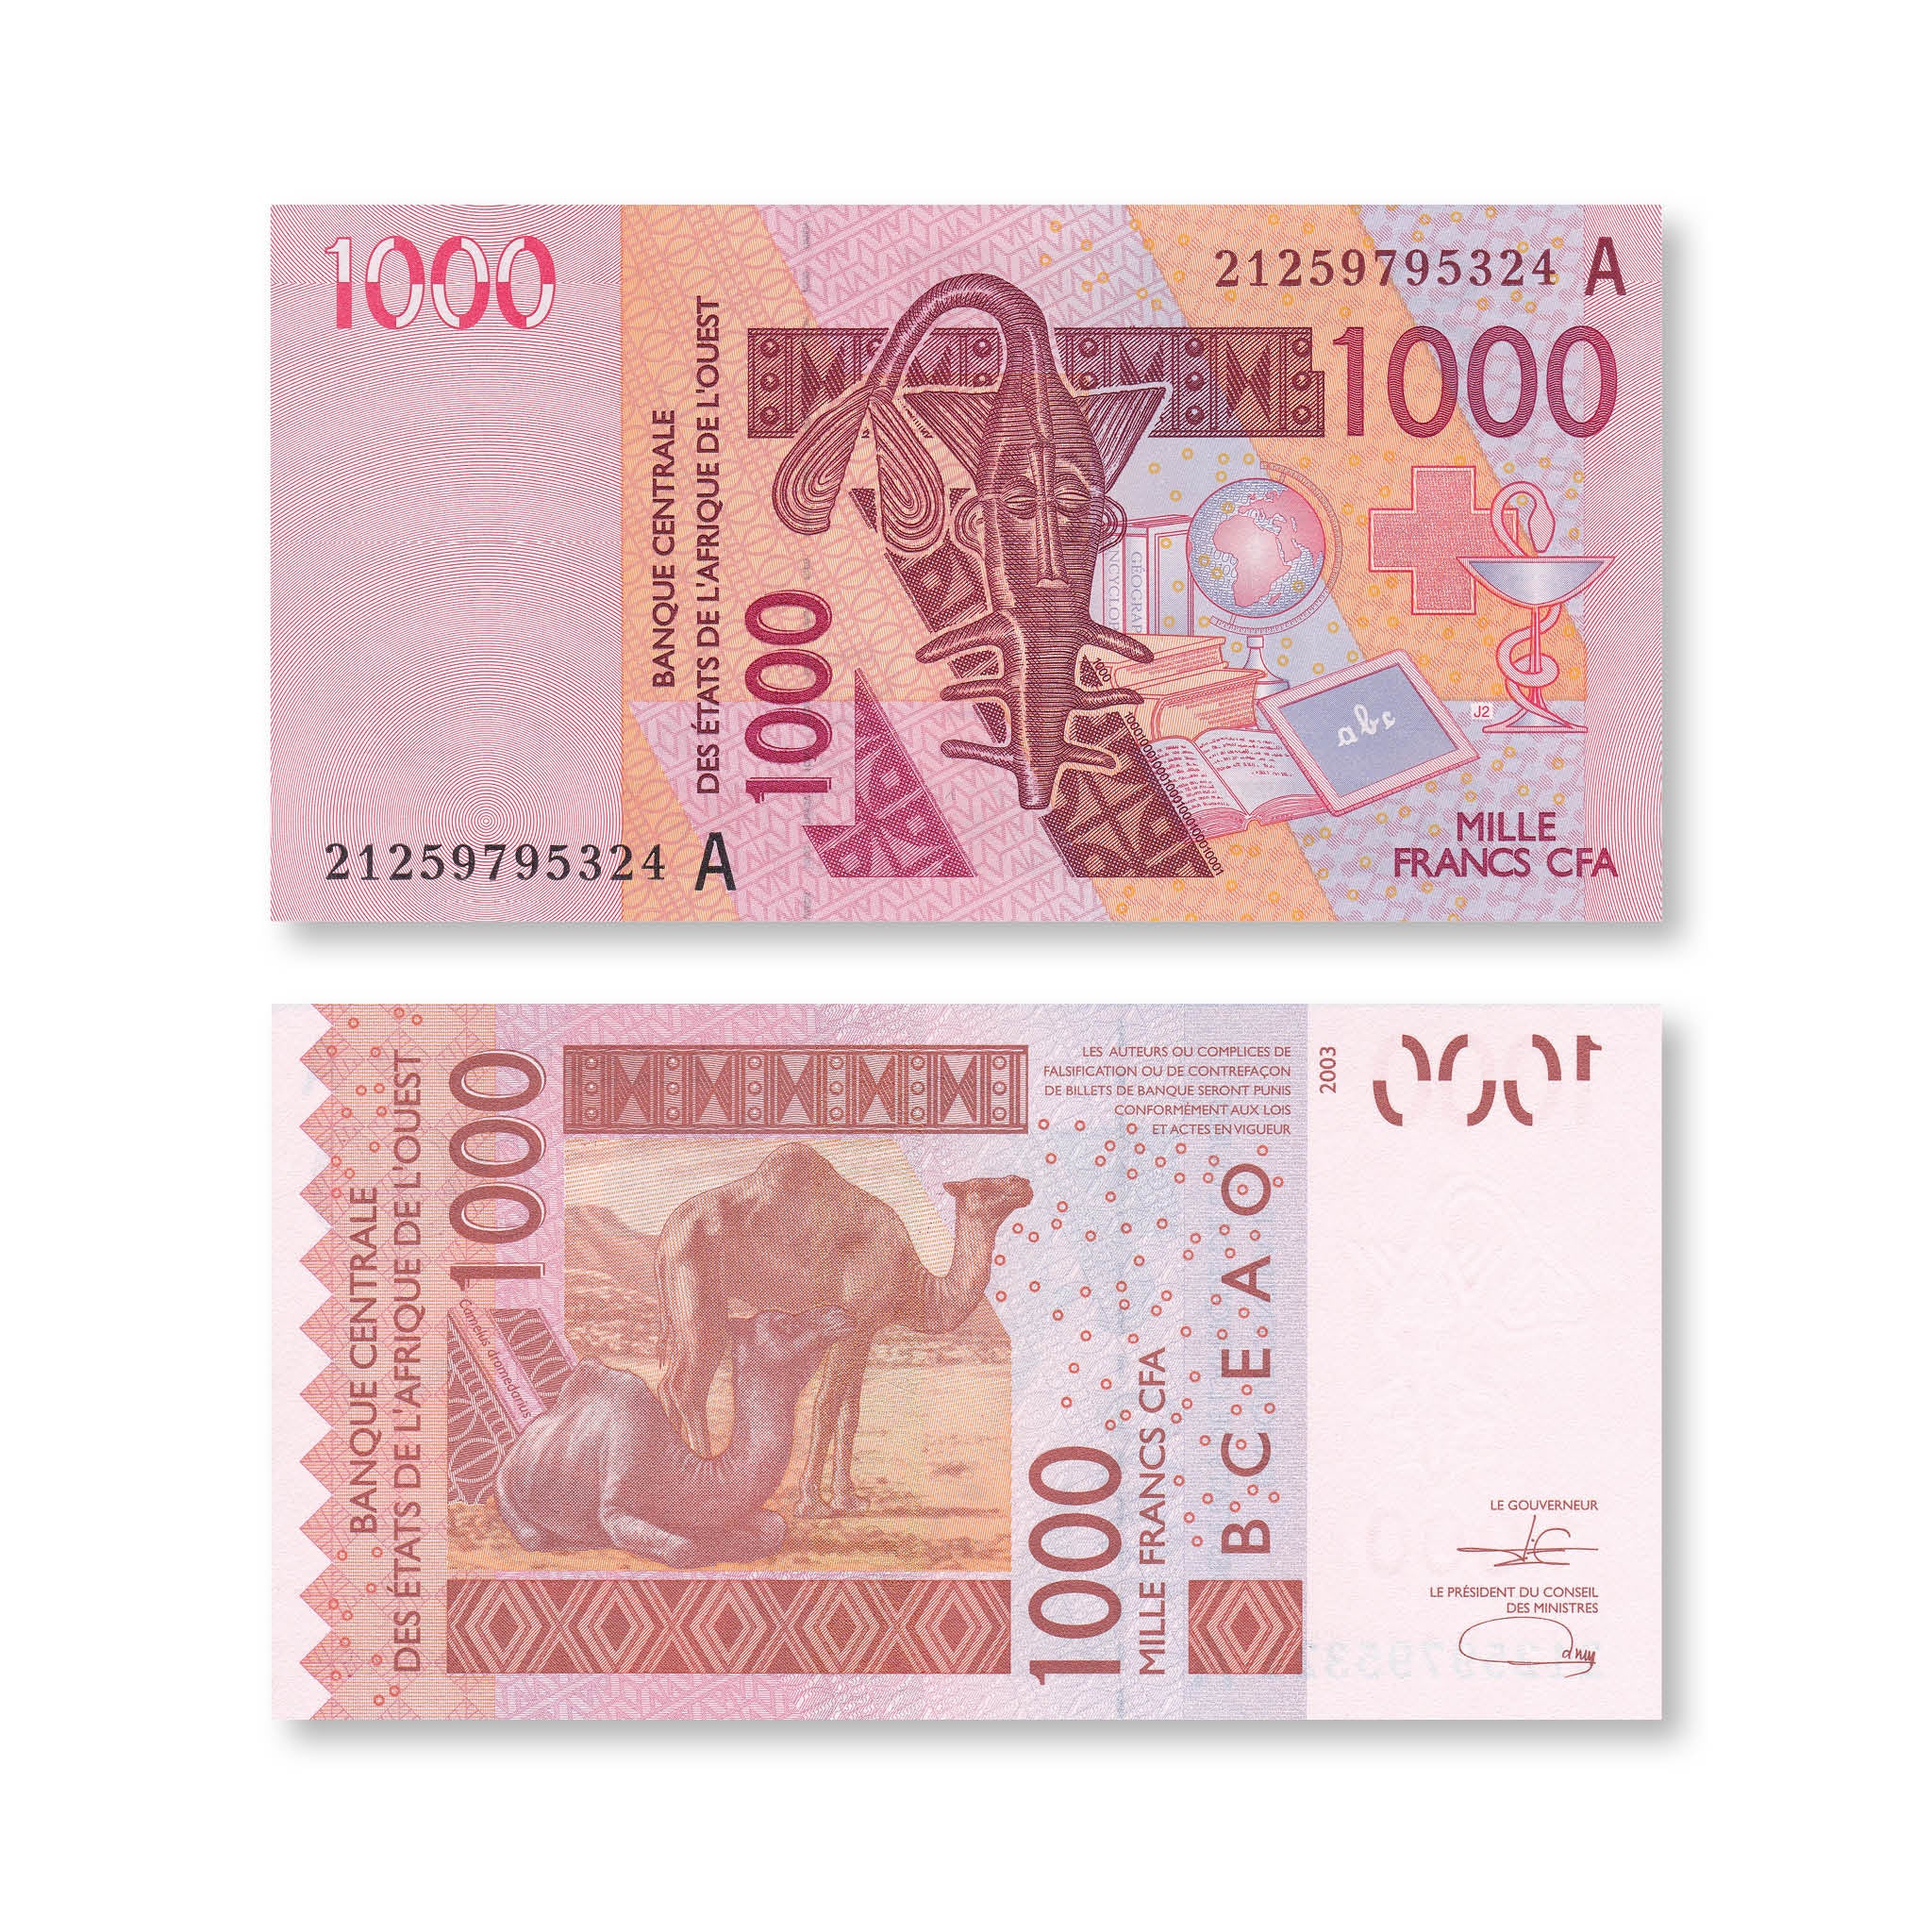 West African States, Ivory Coast, 1000 Francs, 2021, B121Au, P115A, UNC - Robert's World Money - World Banknotes